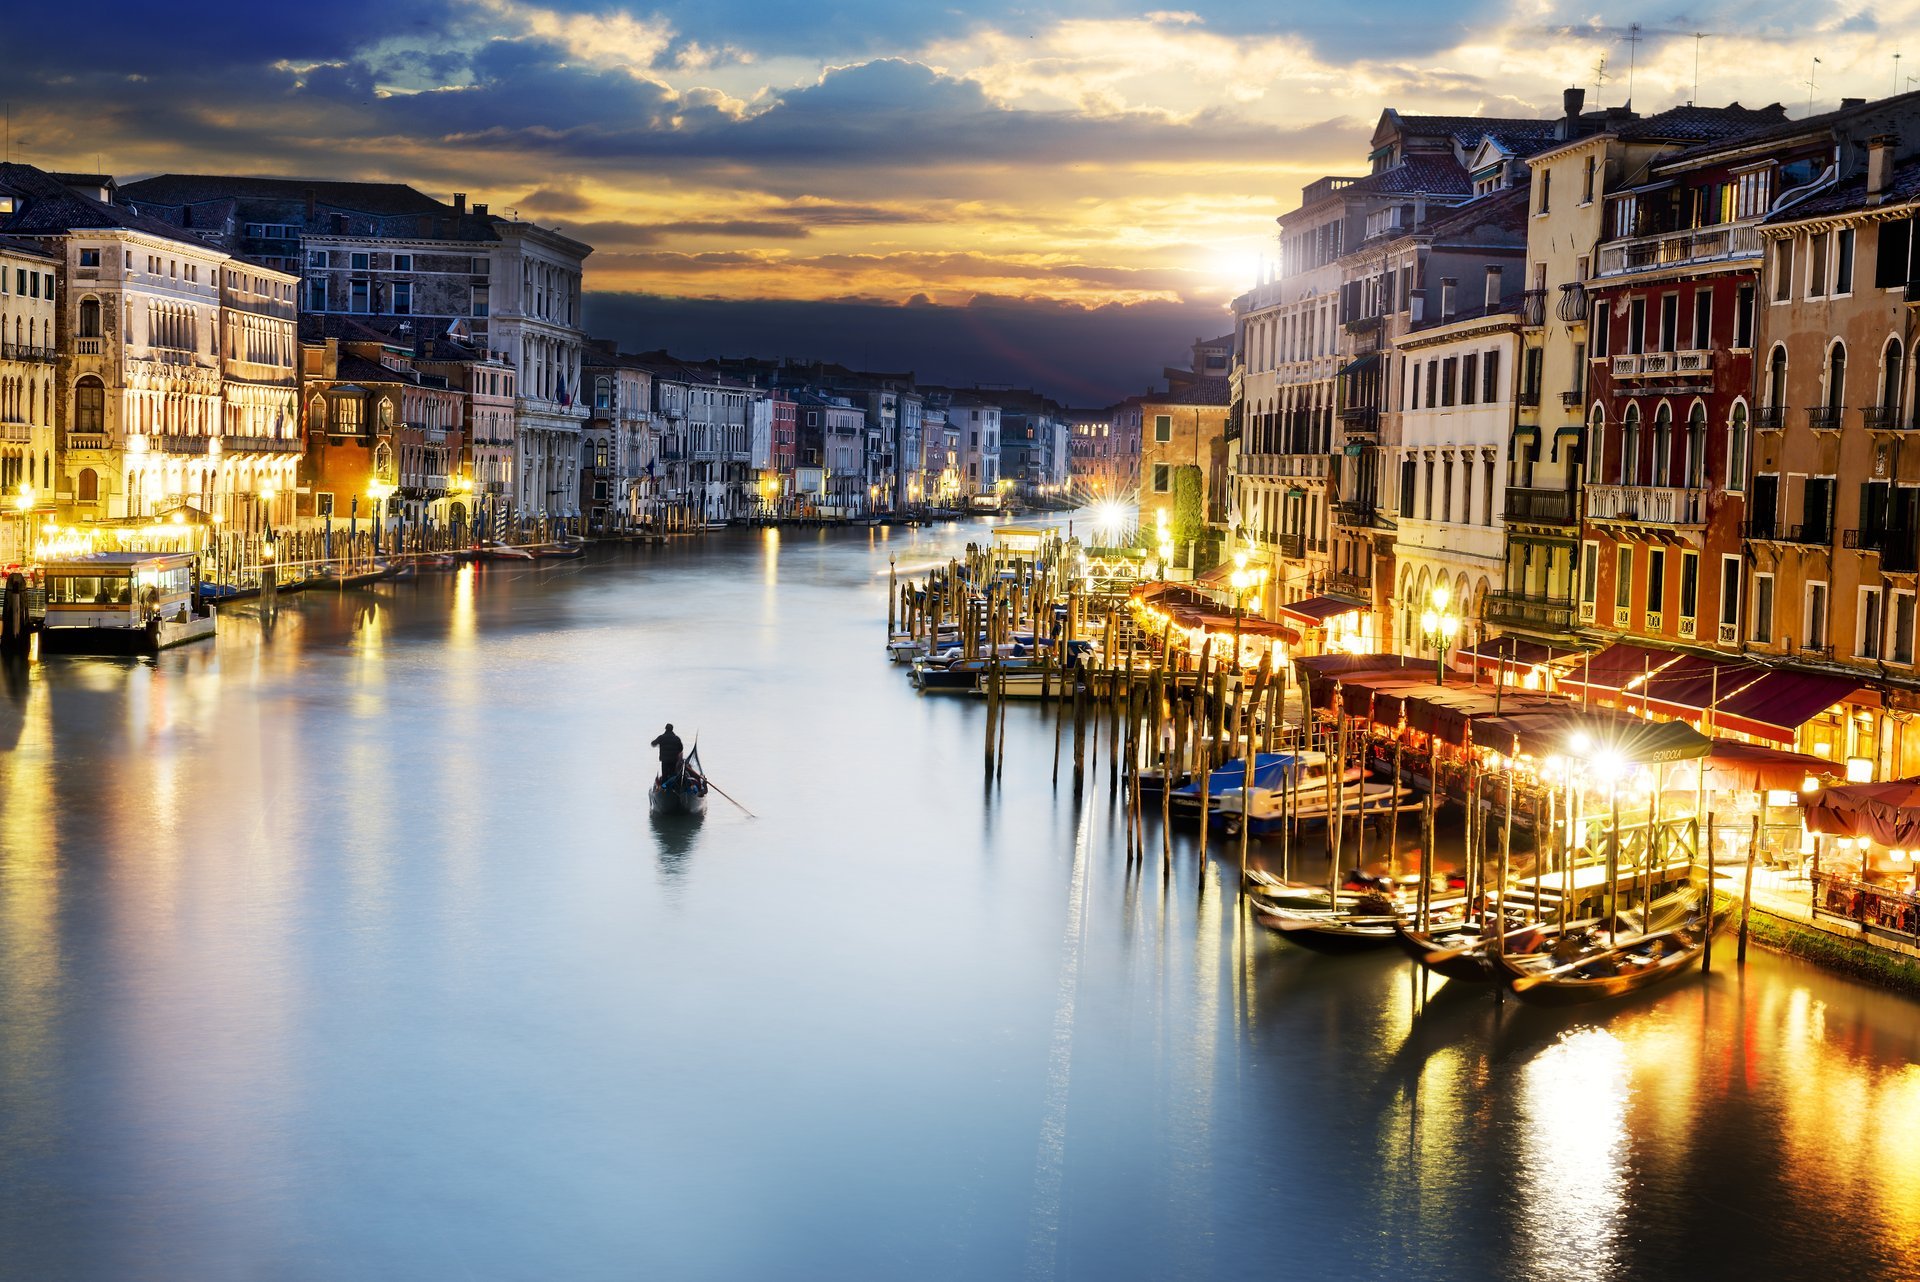 венеция город италия canal grande гранд-канал вечер небо тучи закат дома здания море гондолы люди фонари освещение